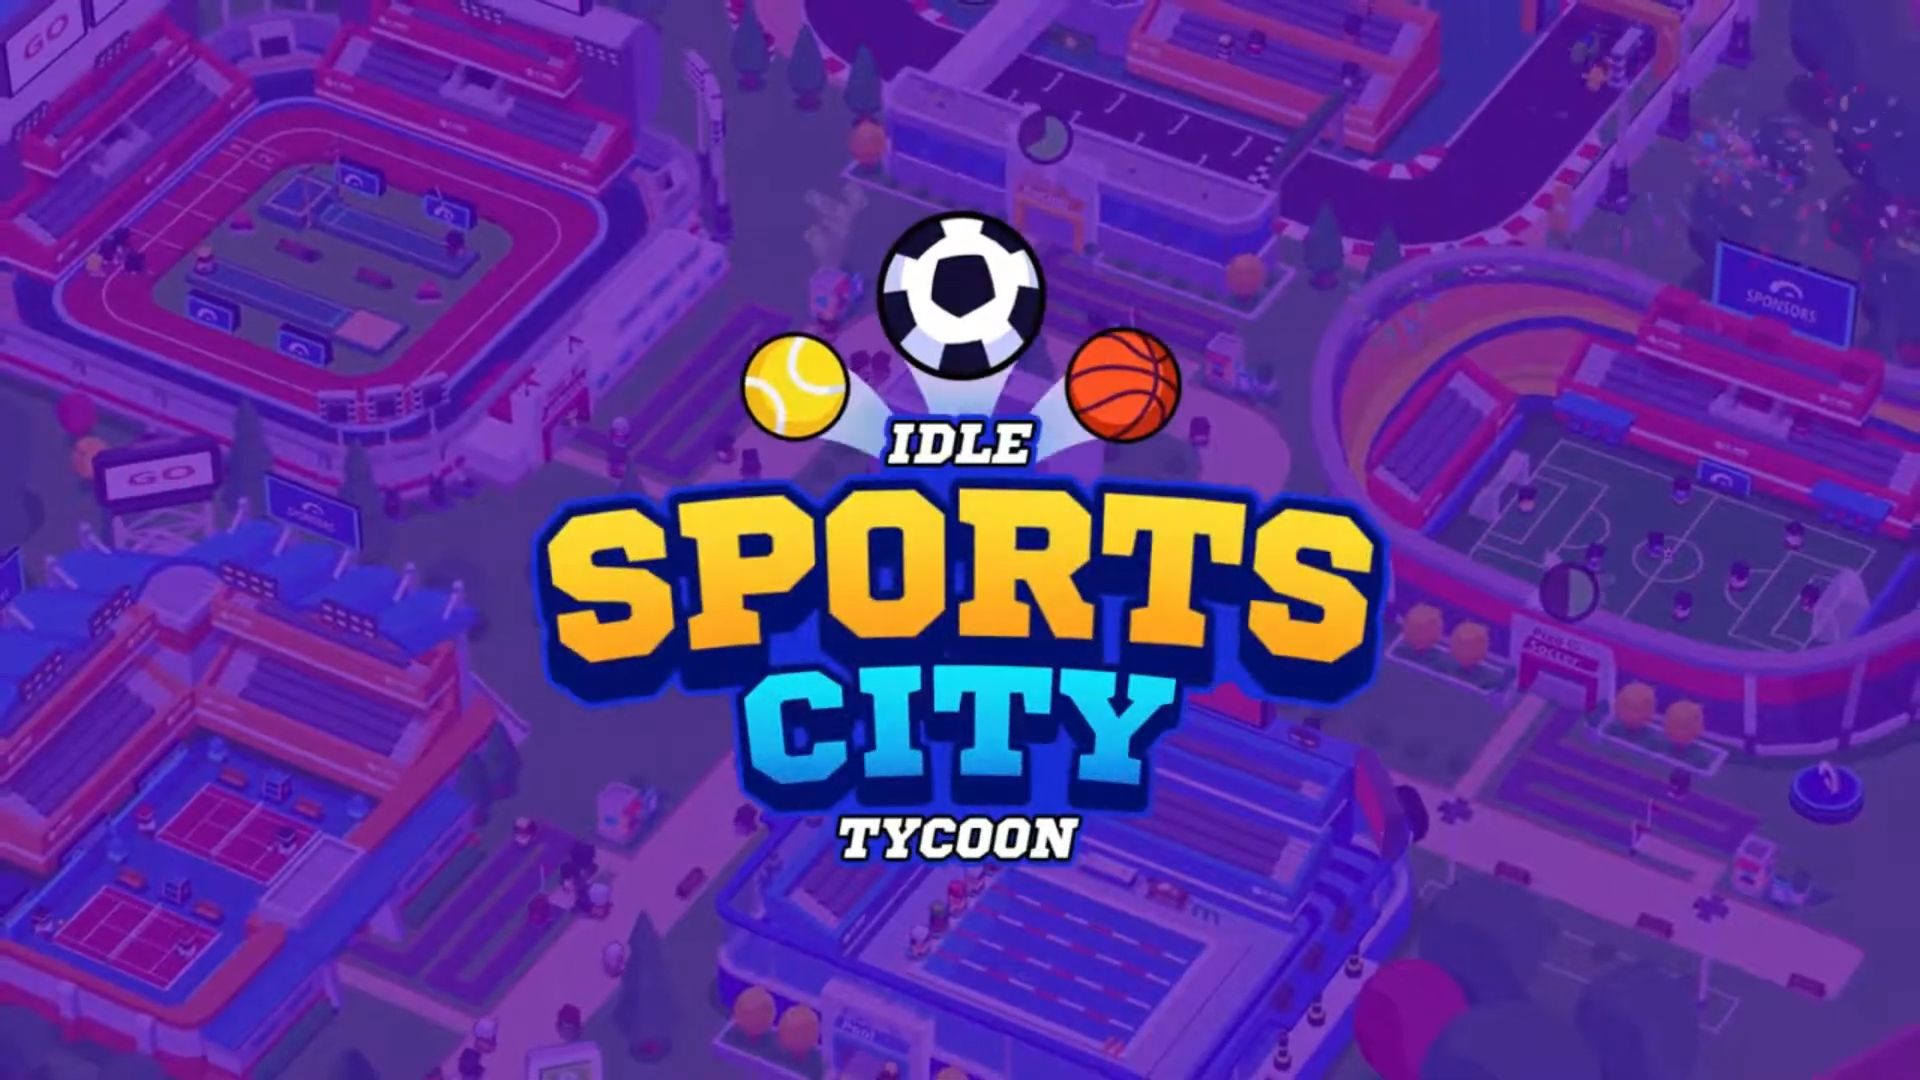 Sports City Tycoon - Idle Sports Games Simulator スクリーンショット1